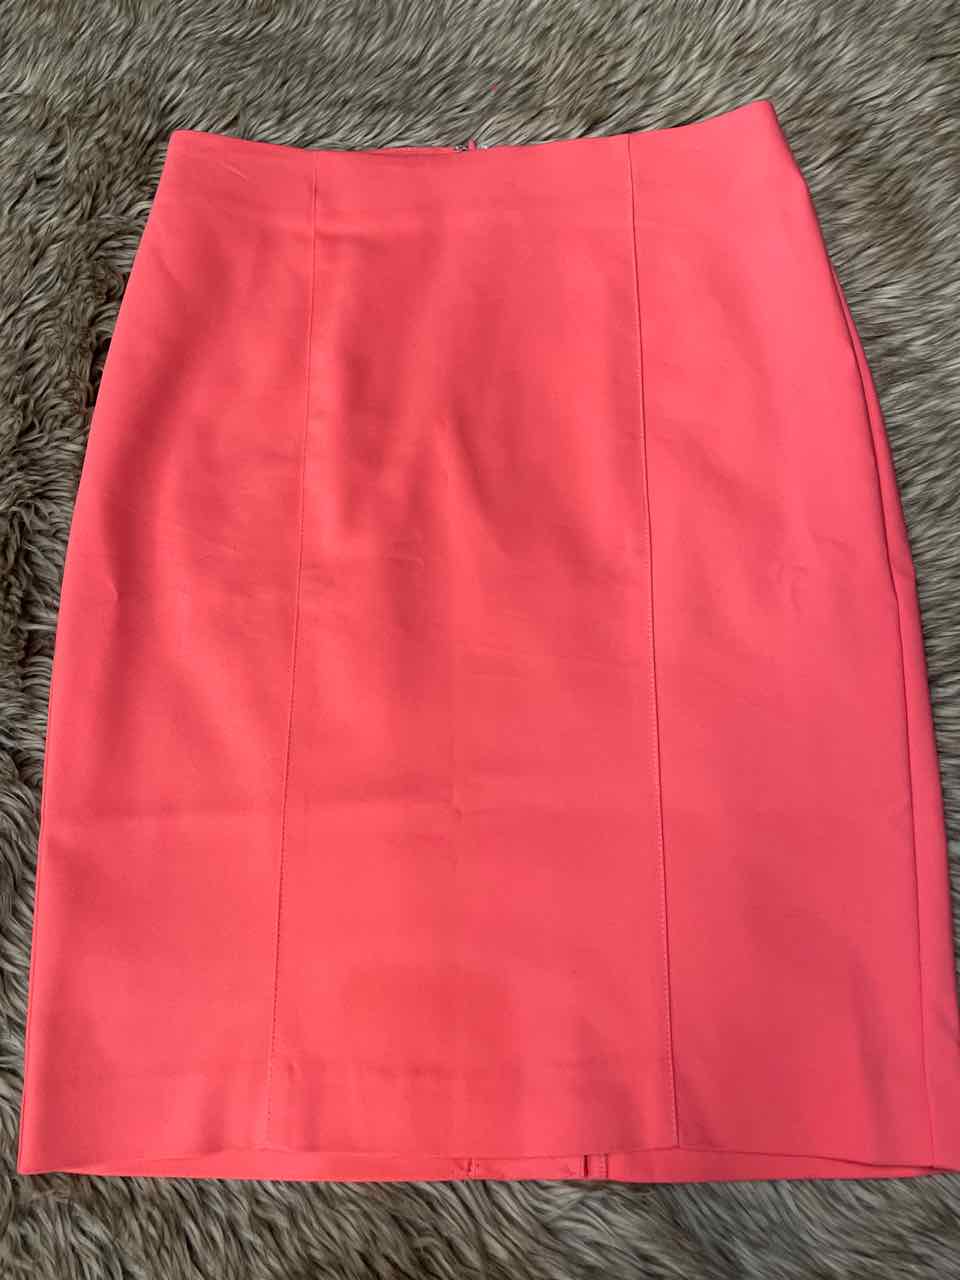 2 - VanHeusen Skirt